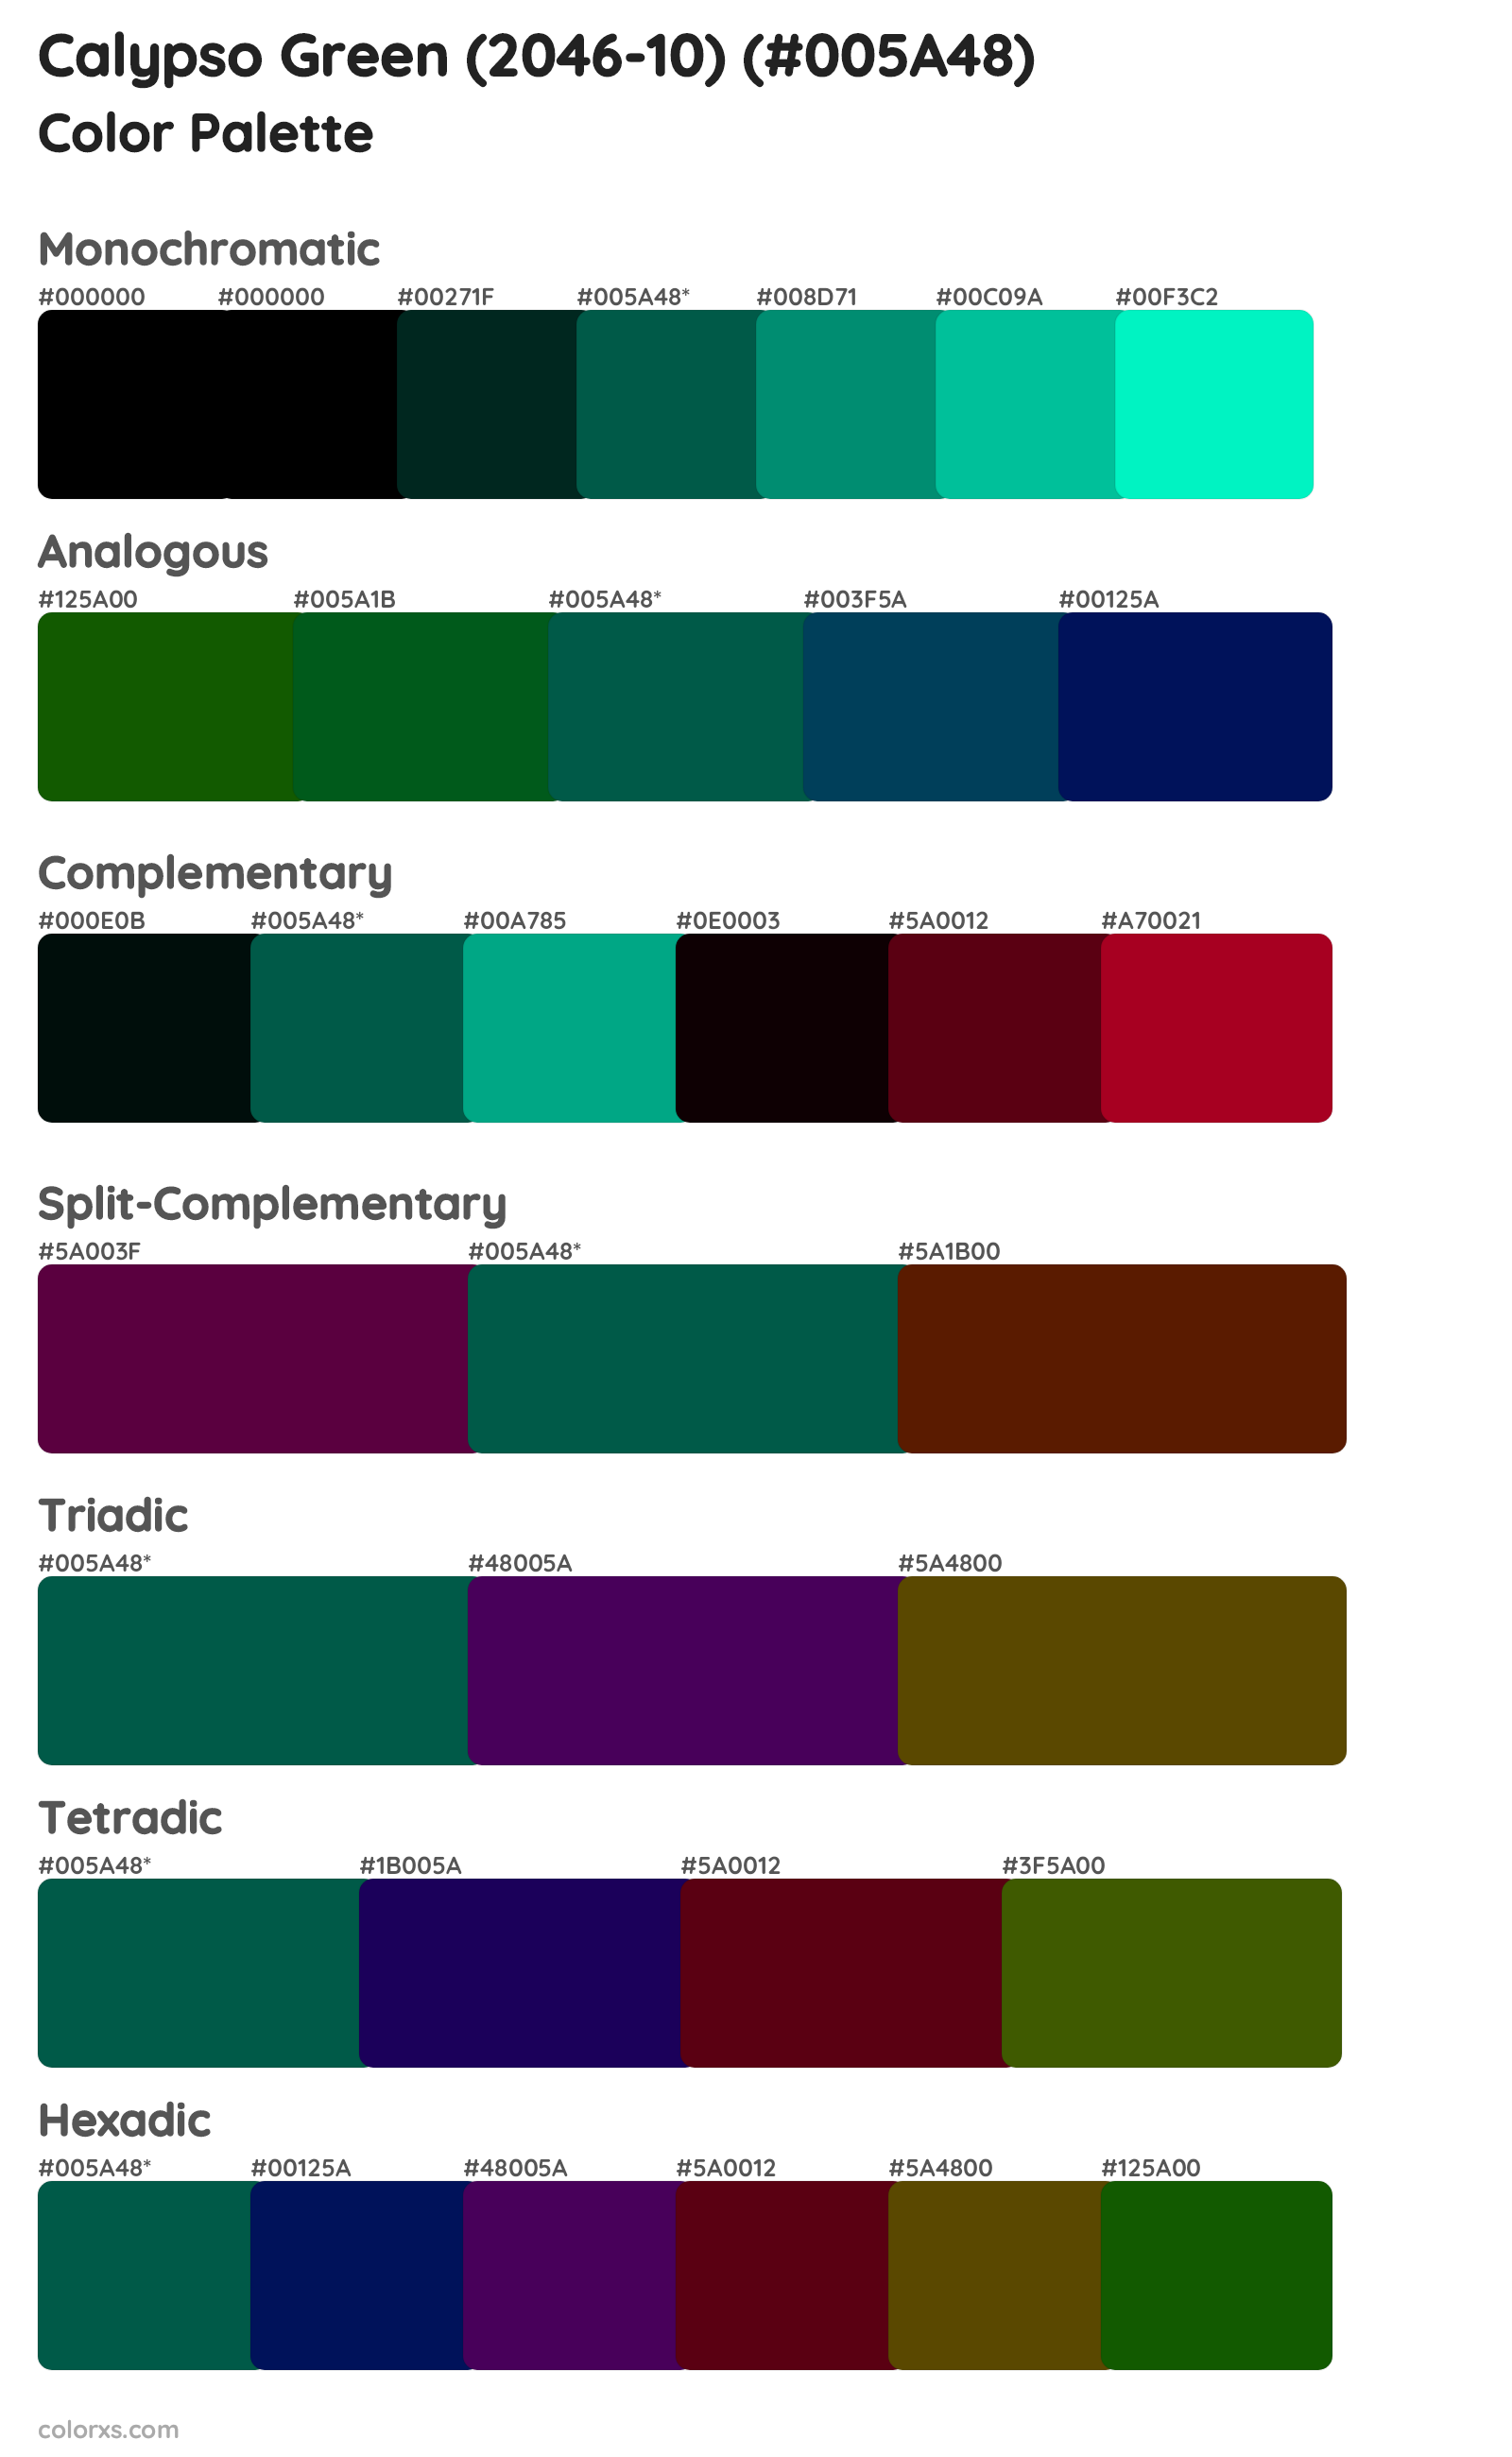 Calypso Green (2046-10) Color Scheme Palettes